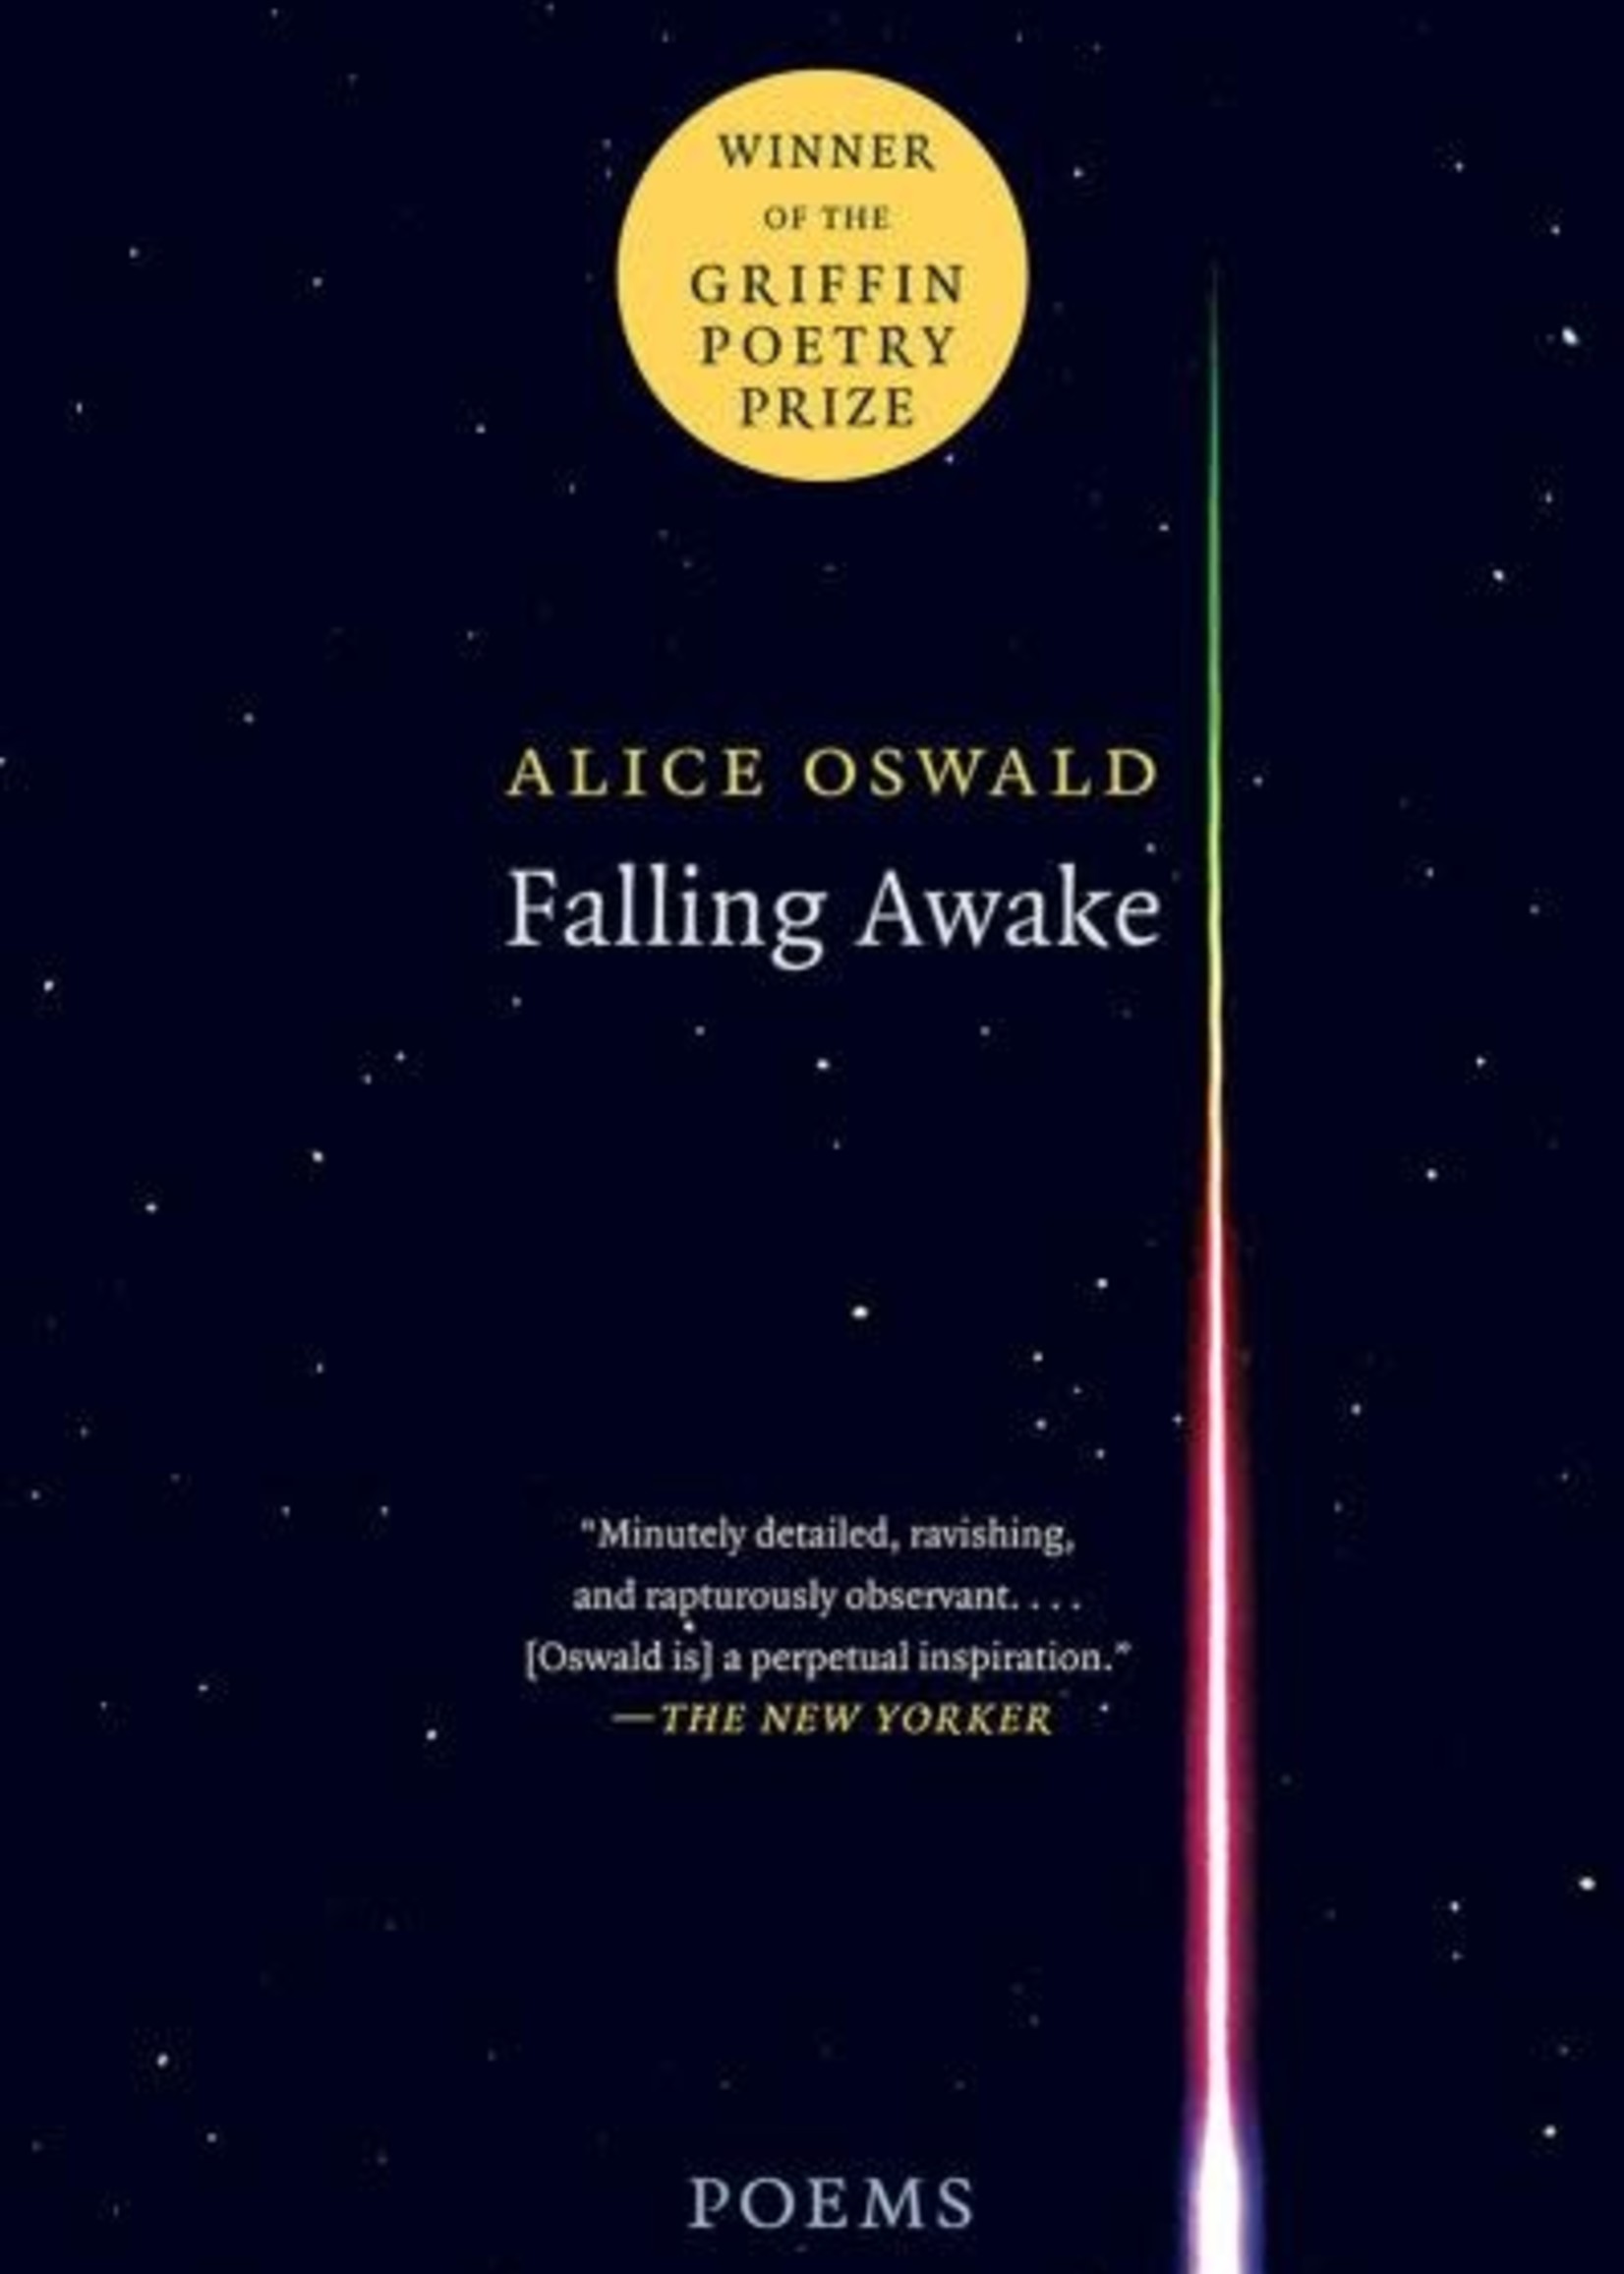 Falling Awake: Poems by Alice Oswald